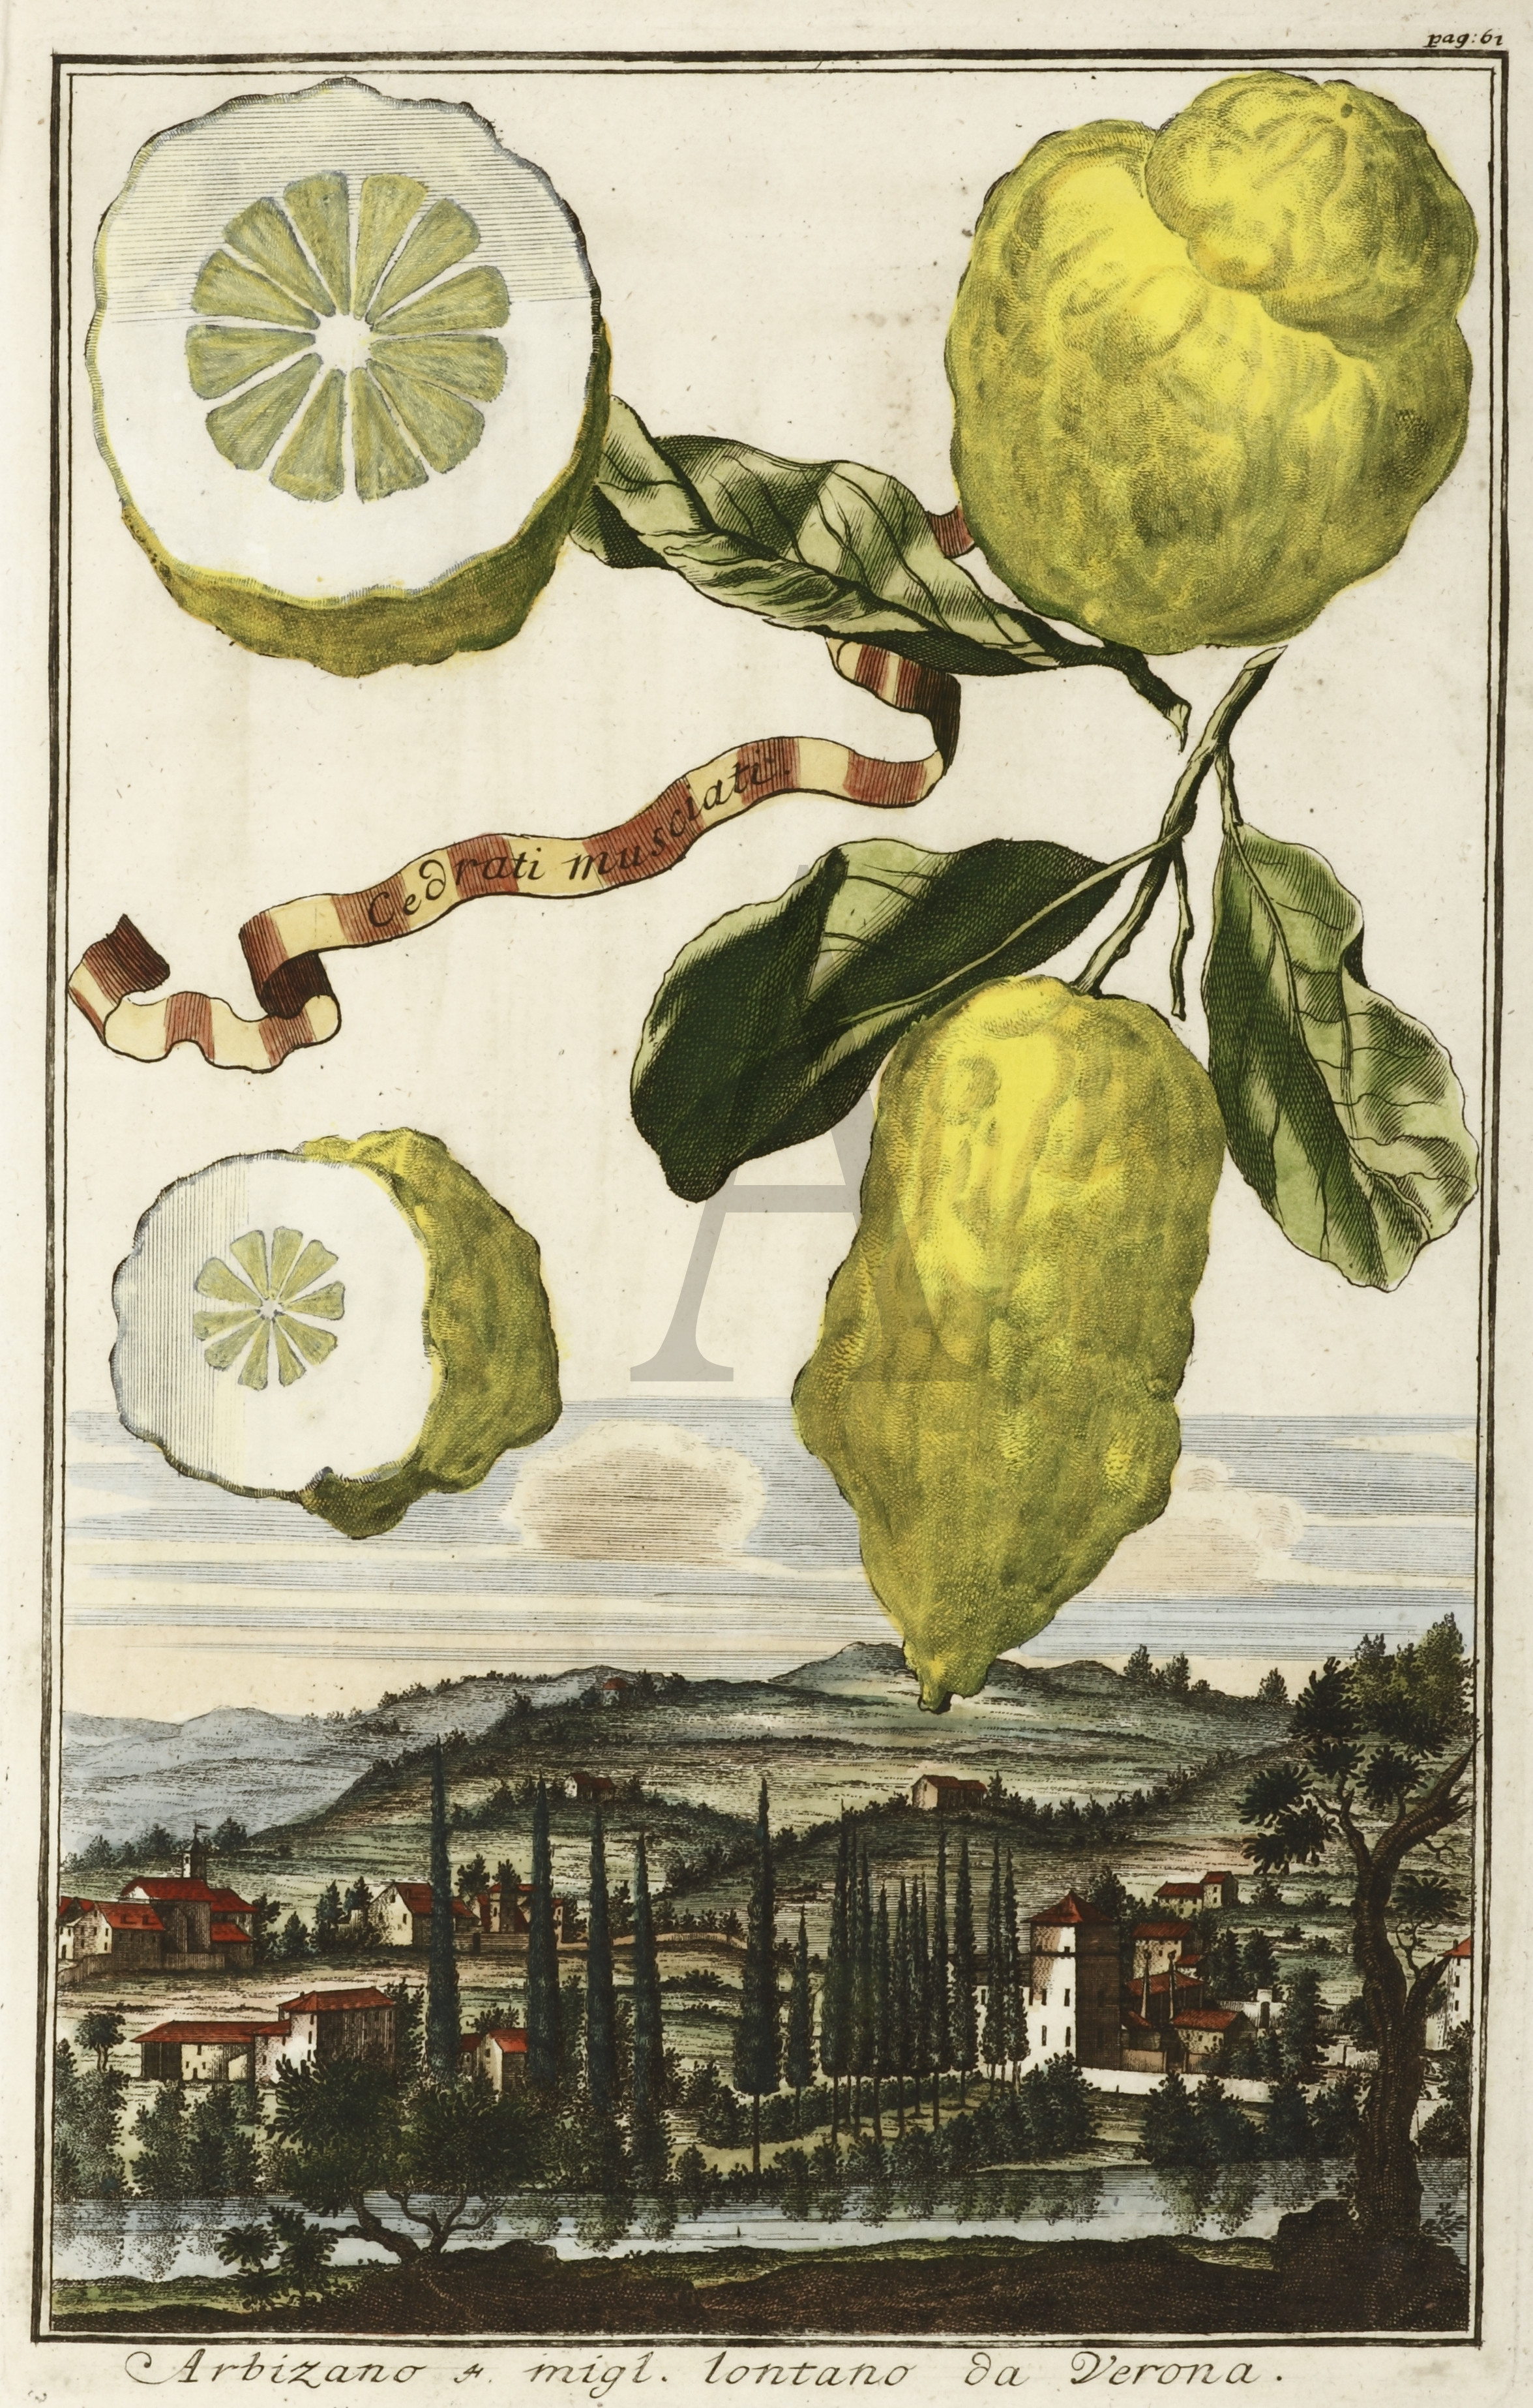 Cedrati musciati. Arbizano 4 migl. lontano da Verona. - Antique Print from 1708